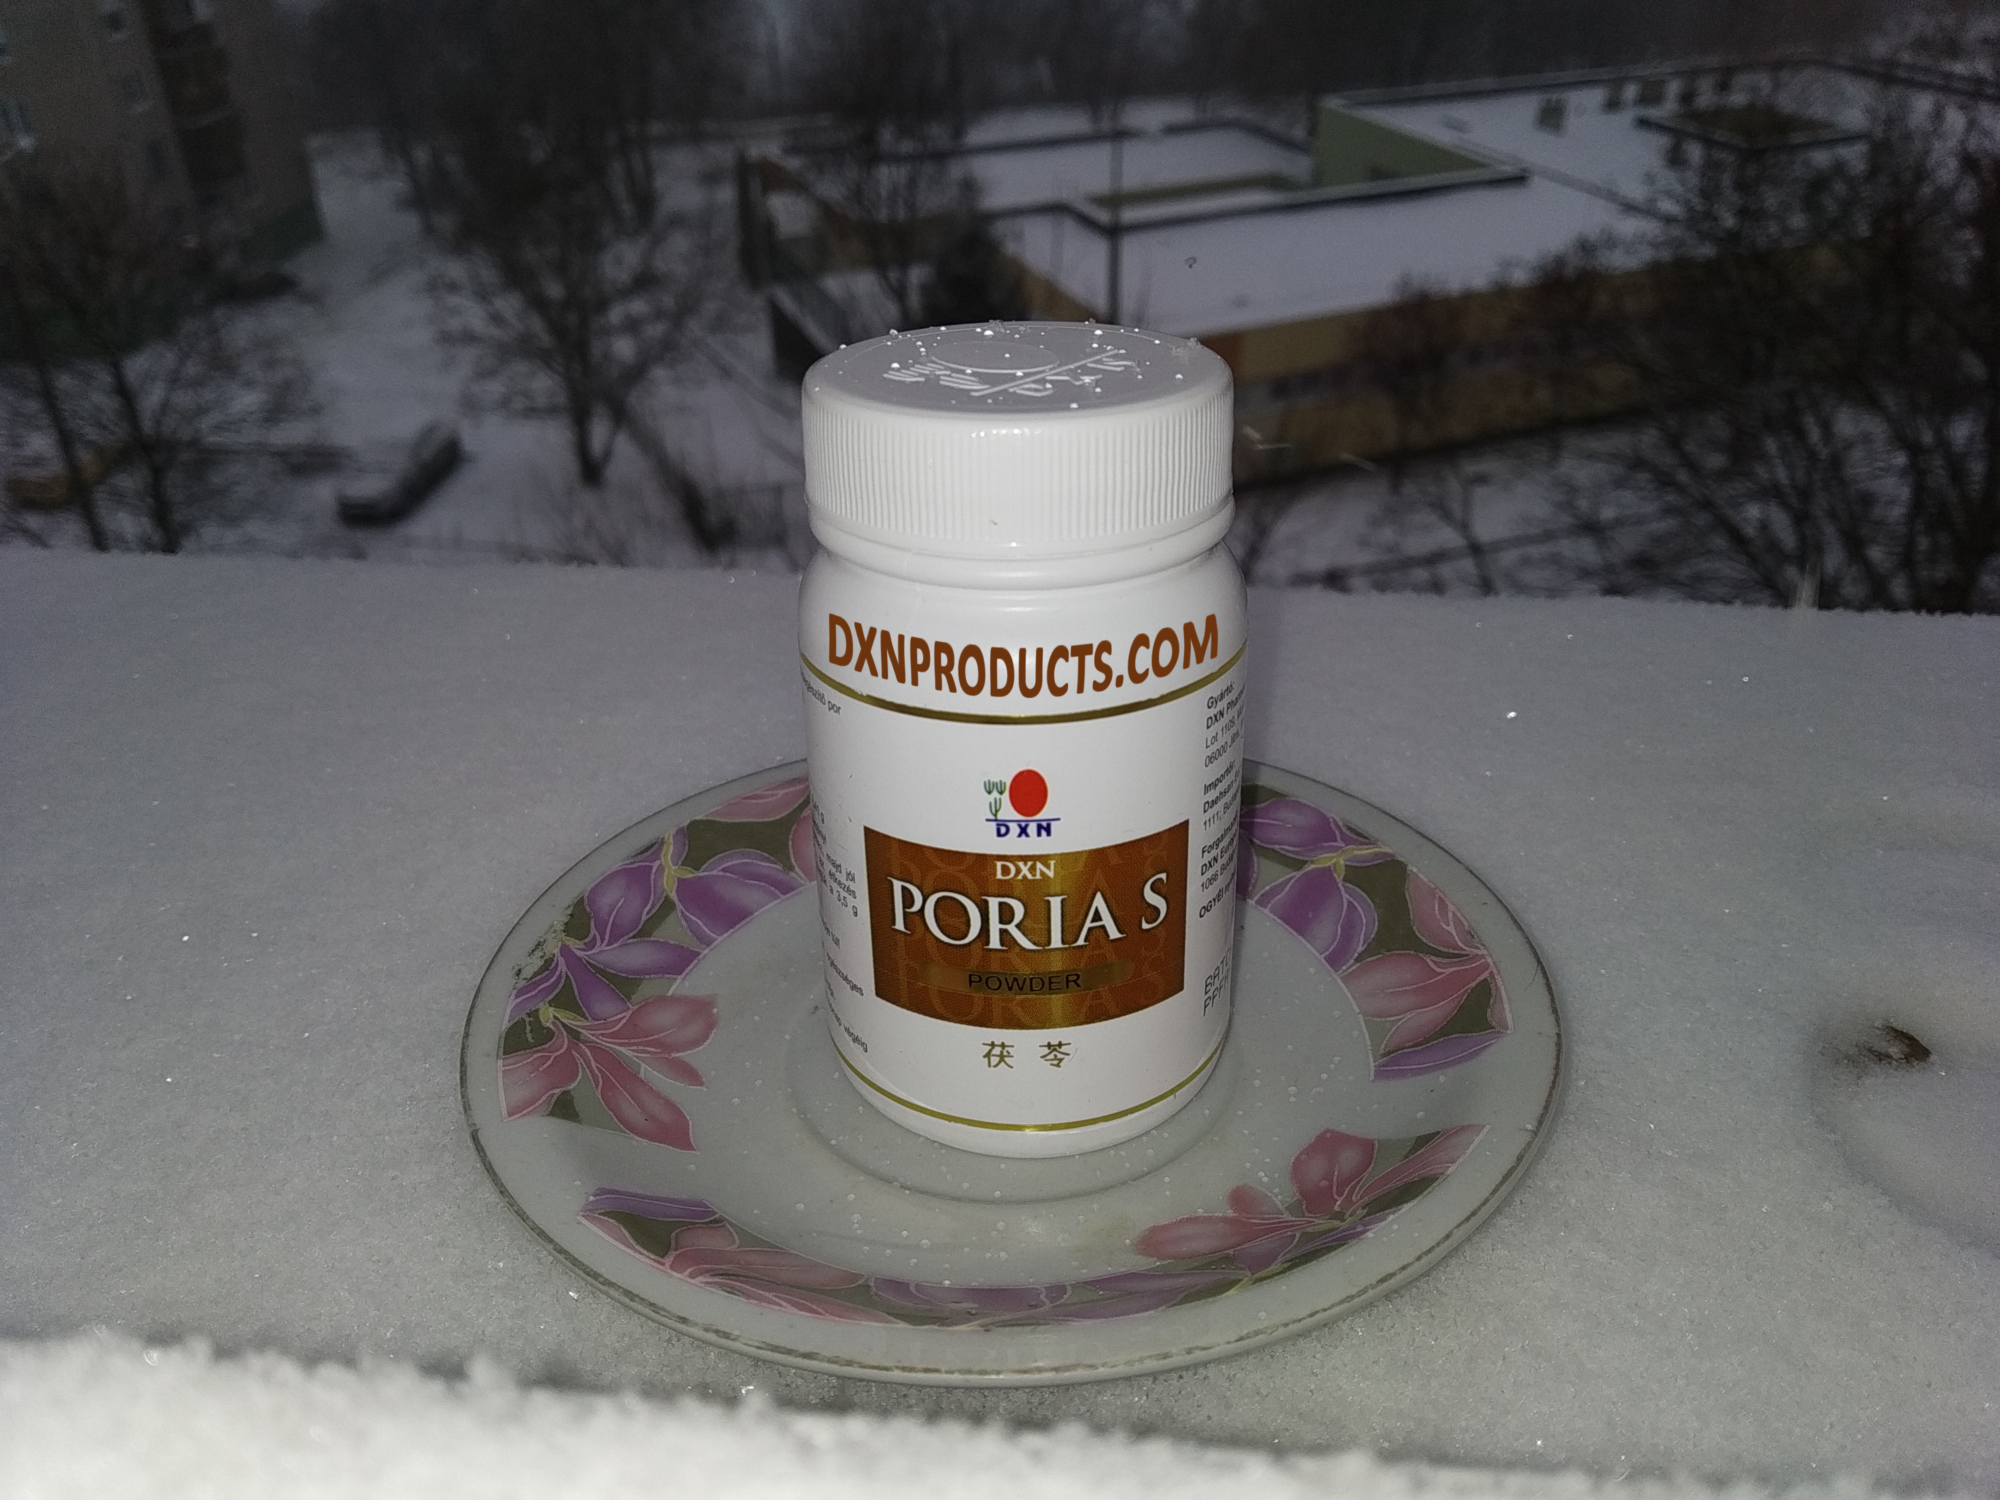 DXN Poria S in snowy window